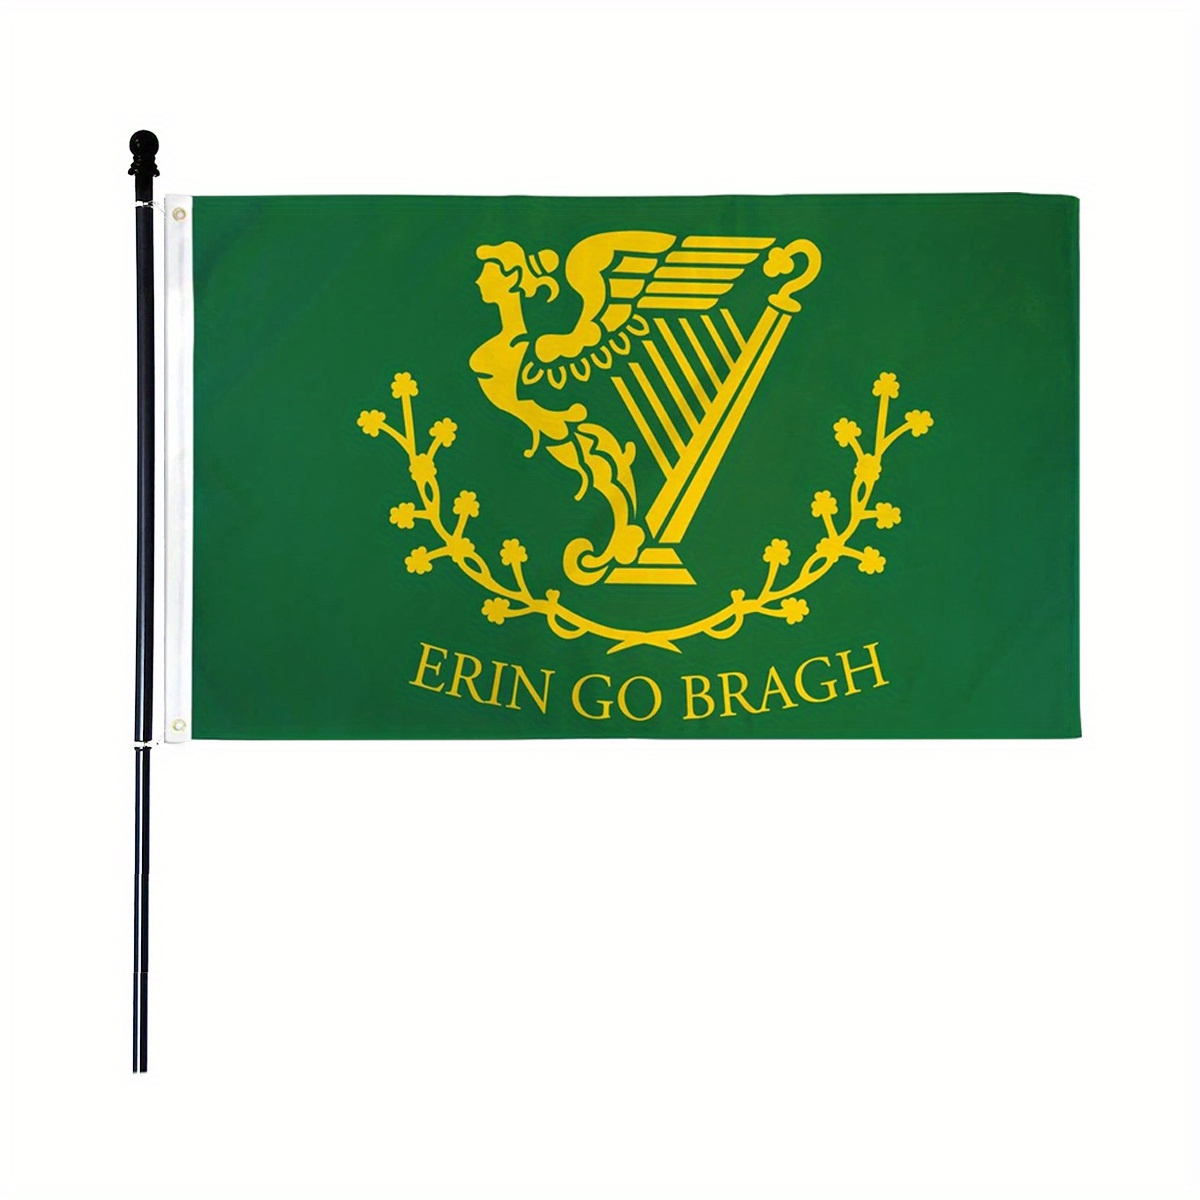 Épingle de harpe irlandaise, épingle de pièce irlandaise, épingle